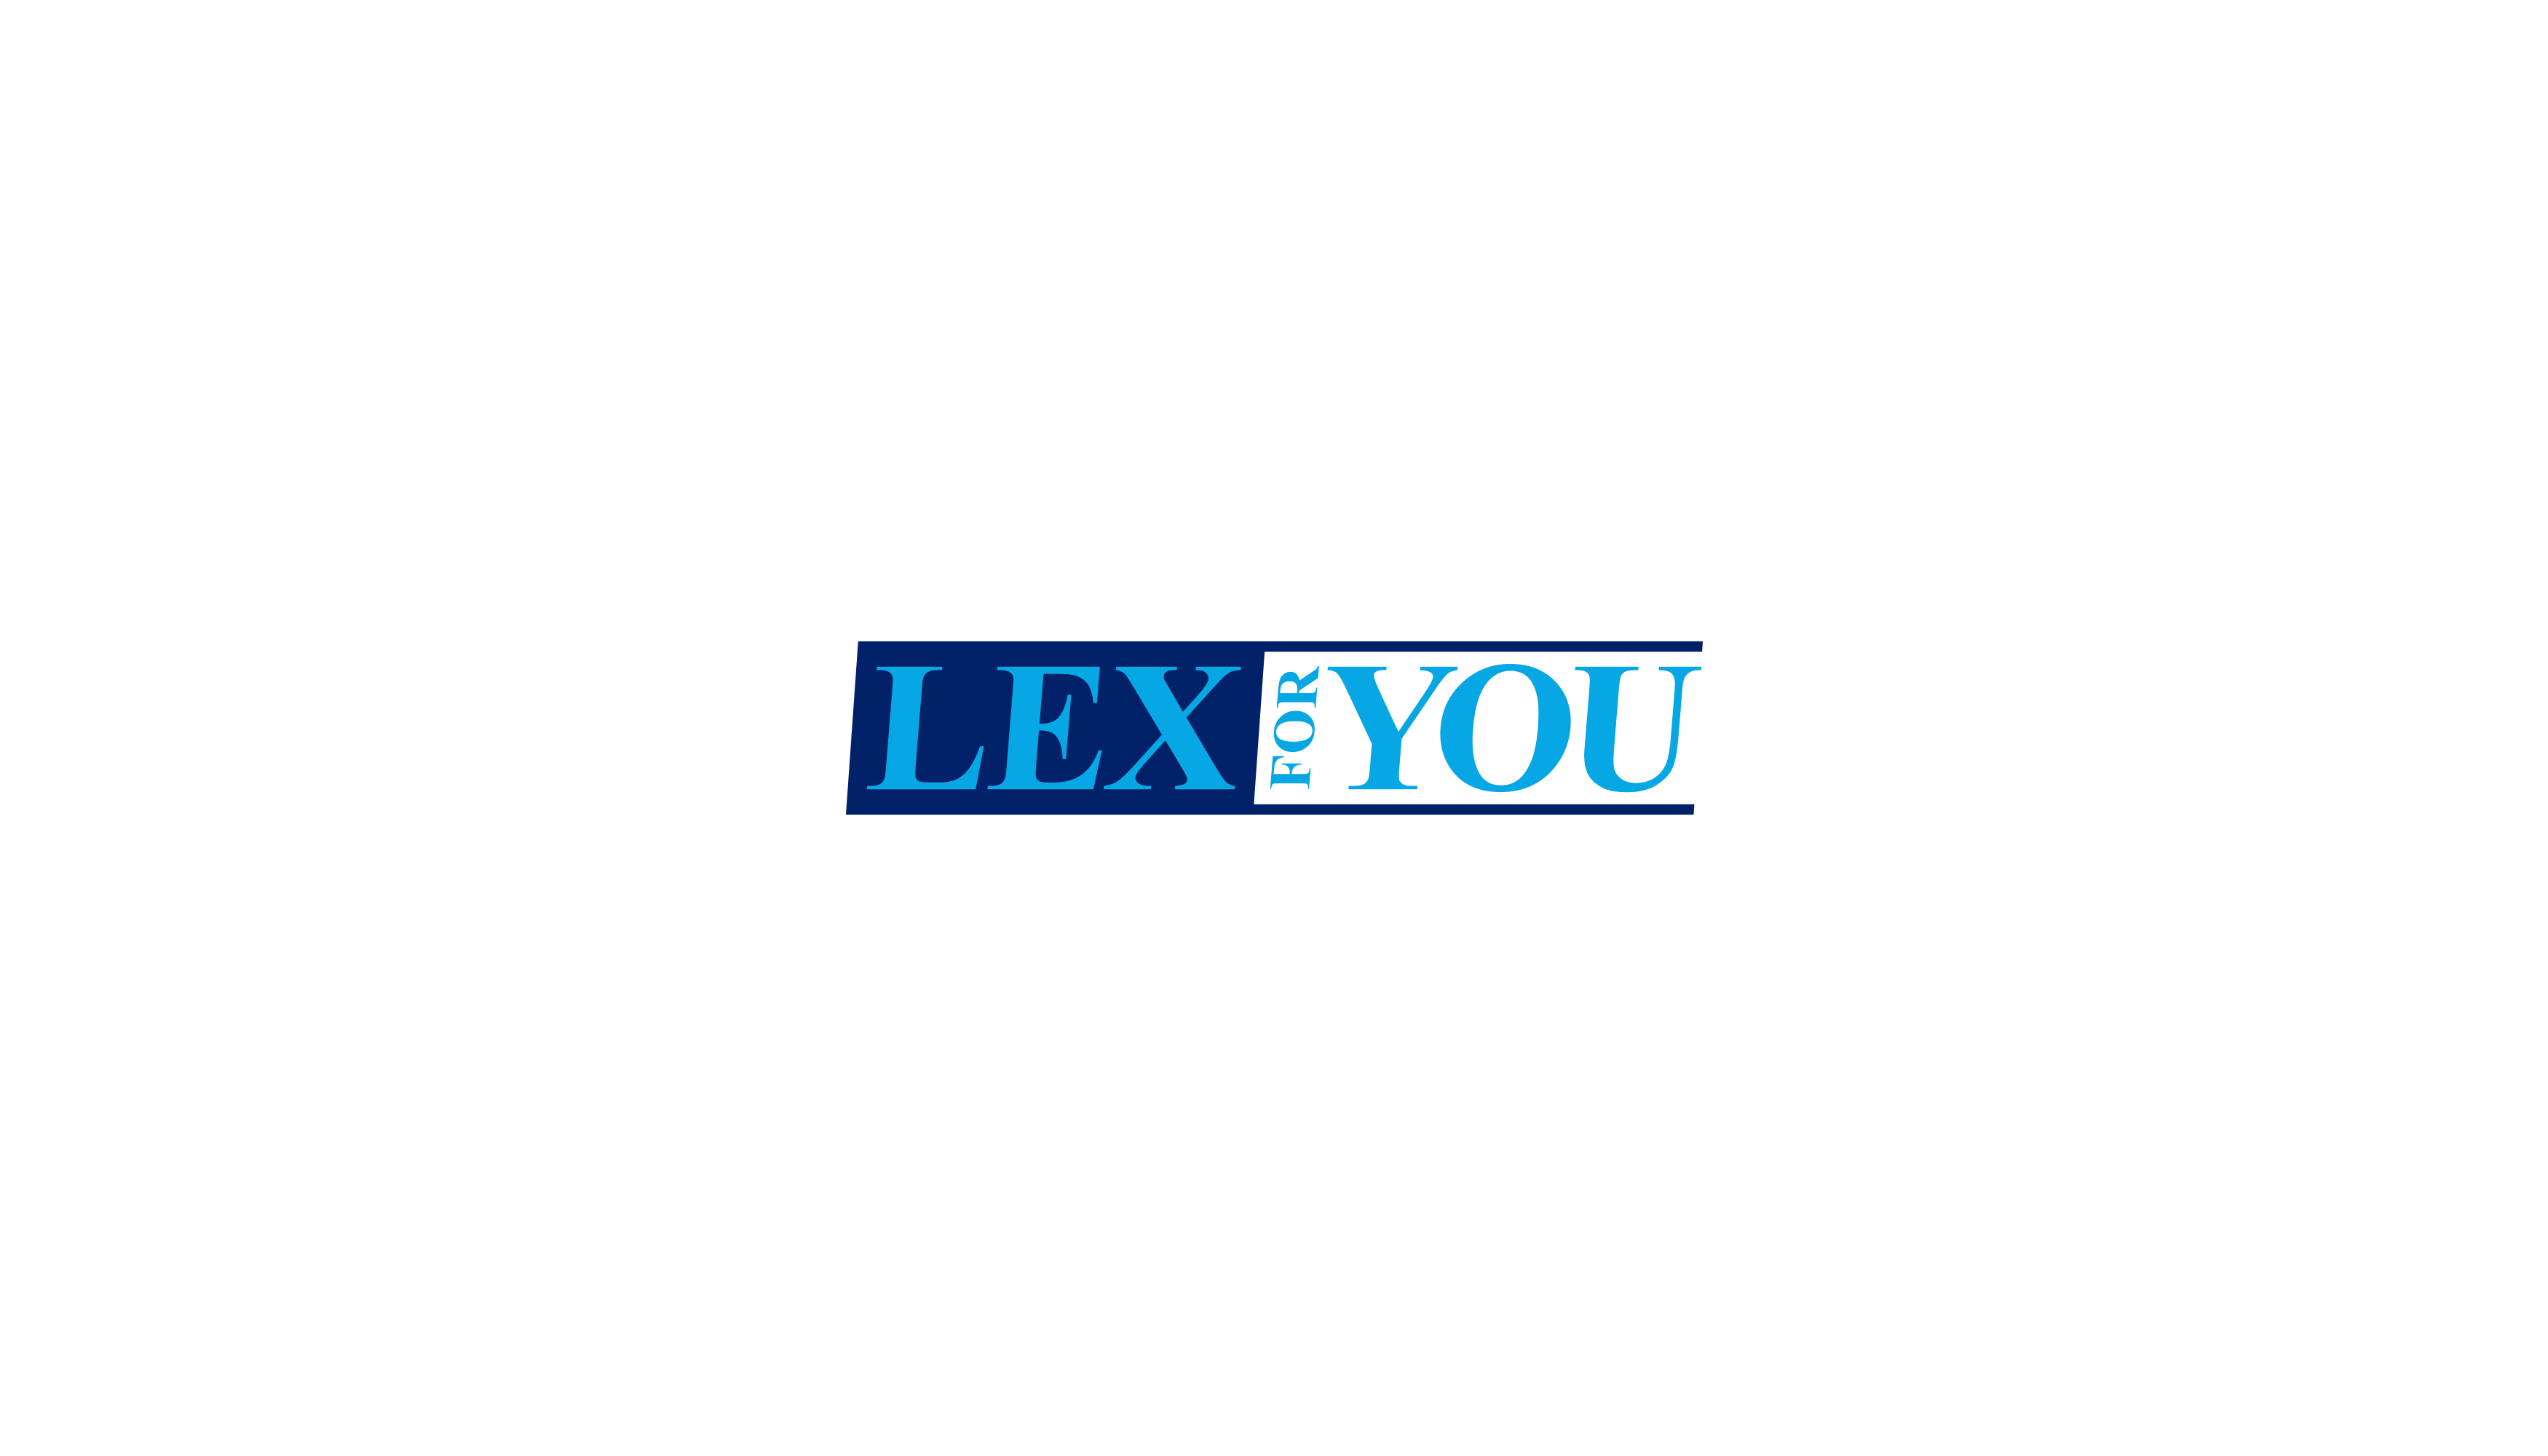 LexForYou Design #8